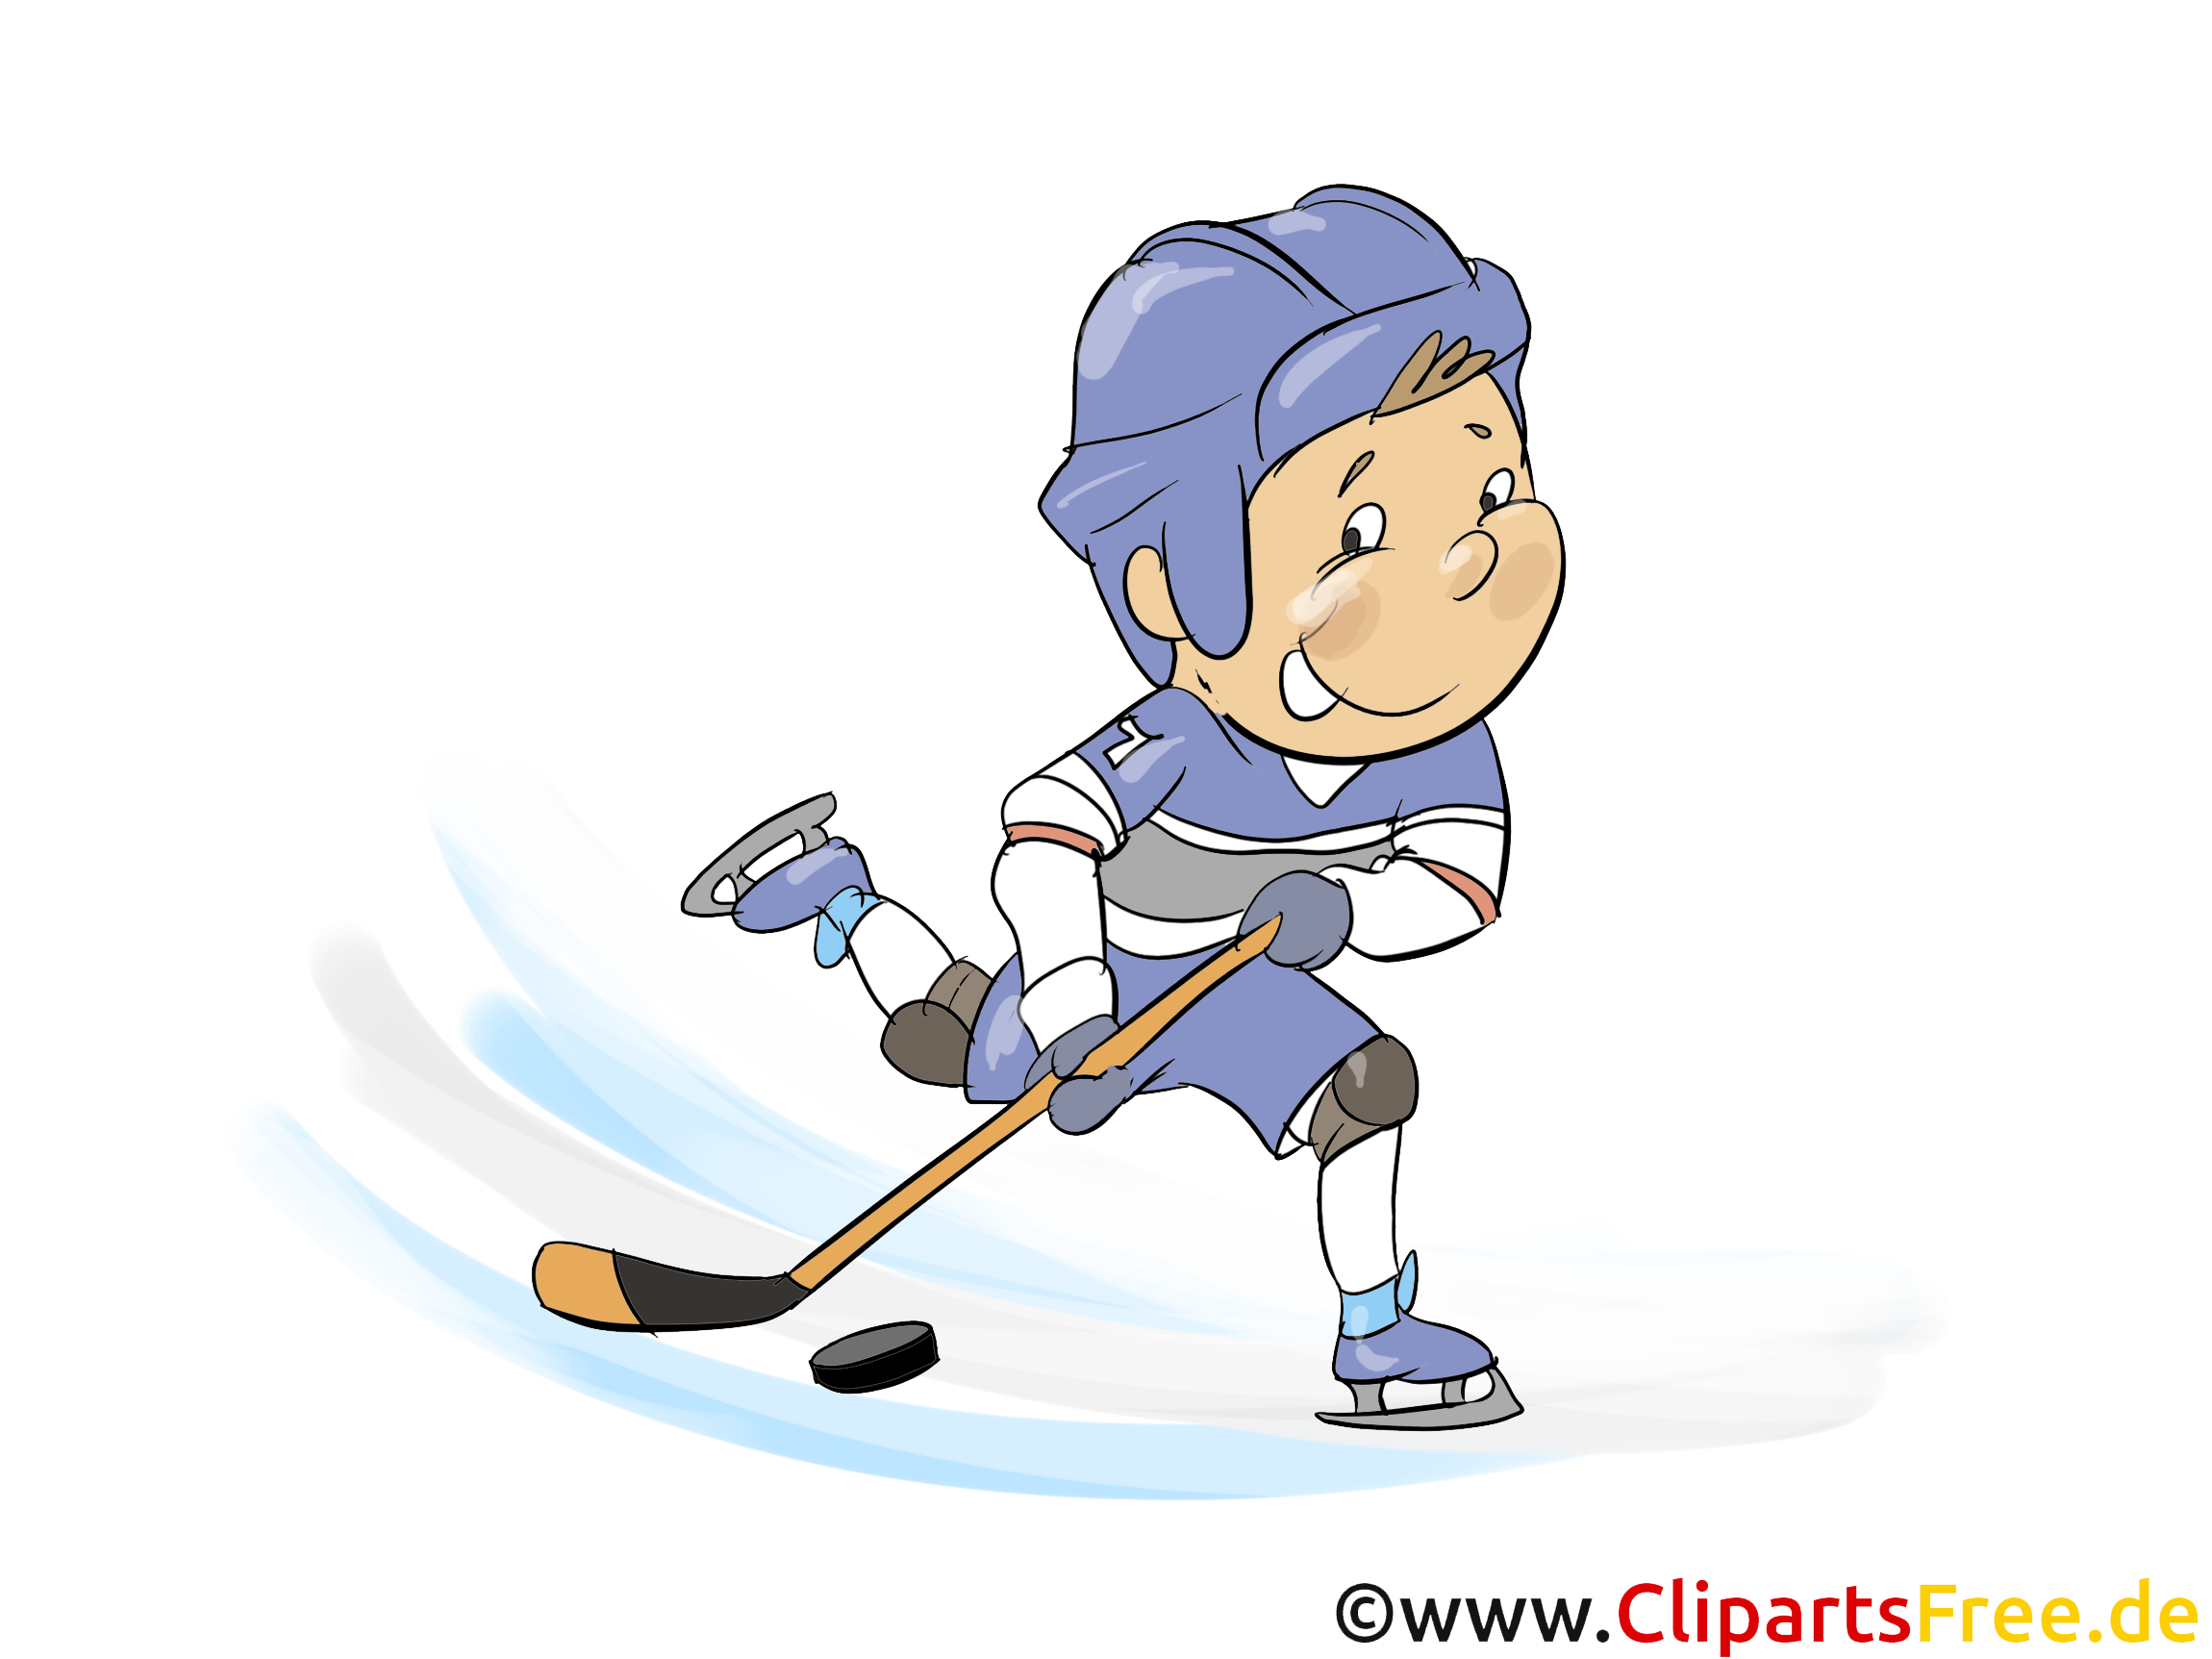 Cross images gratuites – Hockey clipart